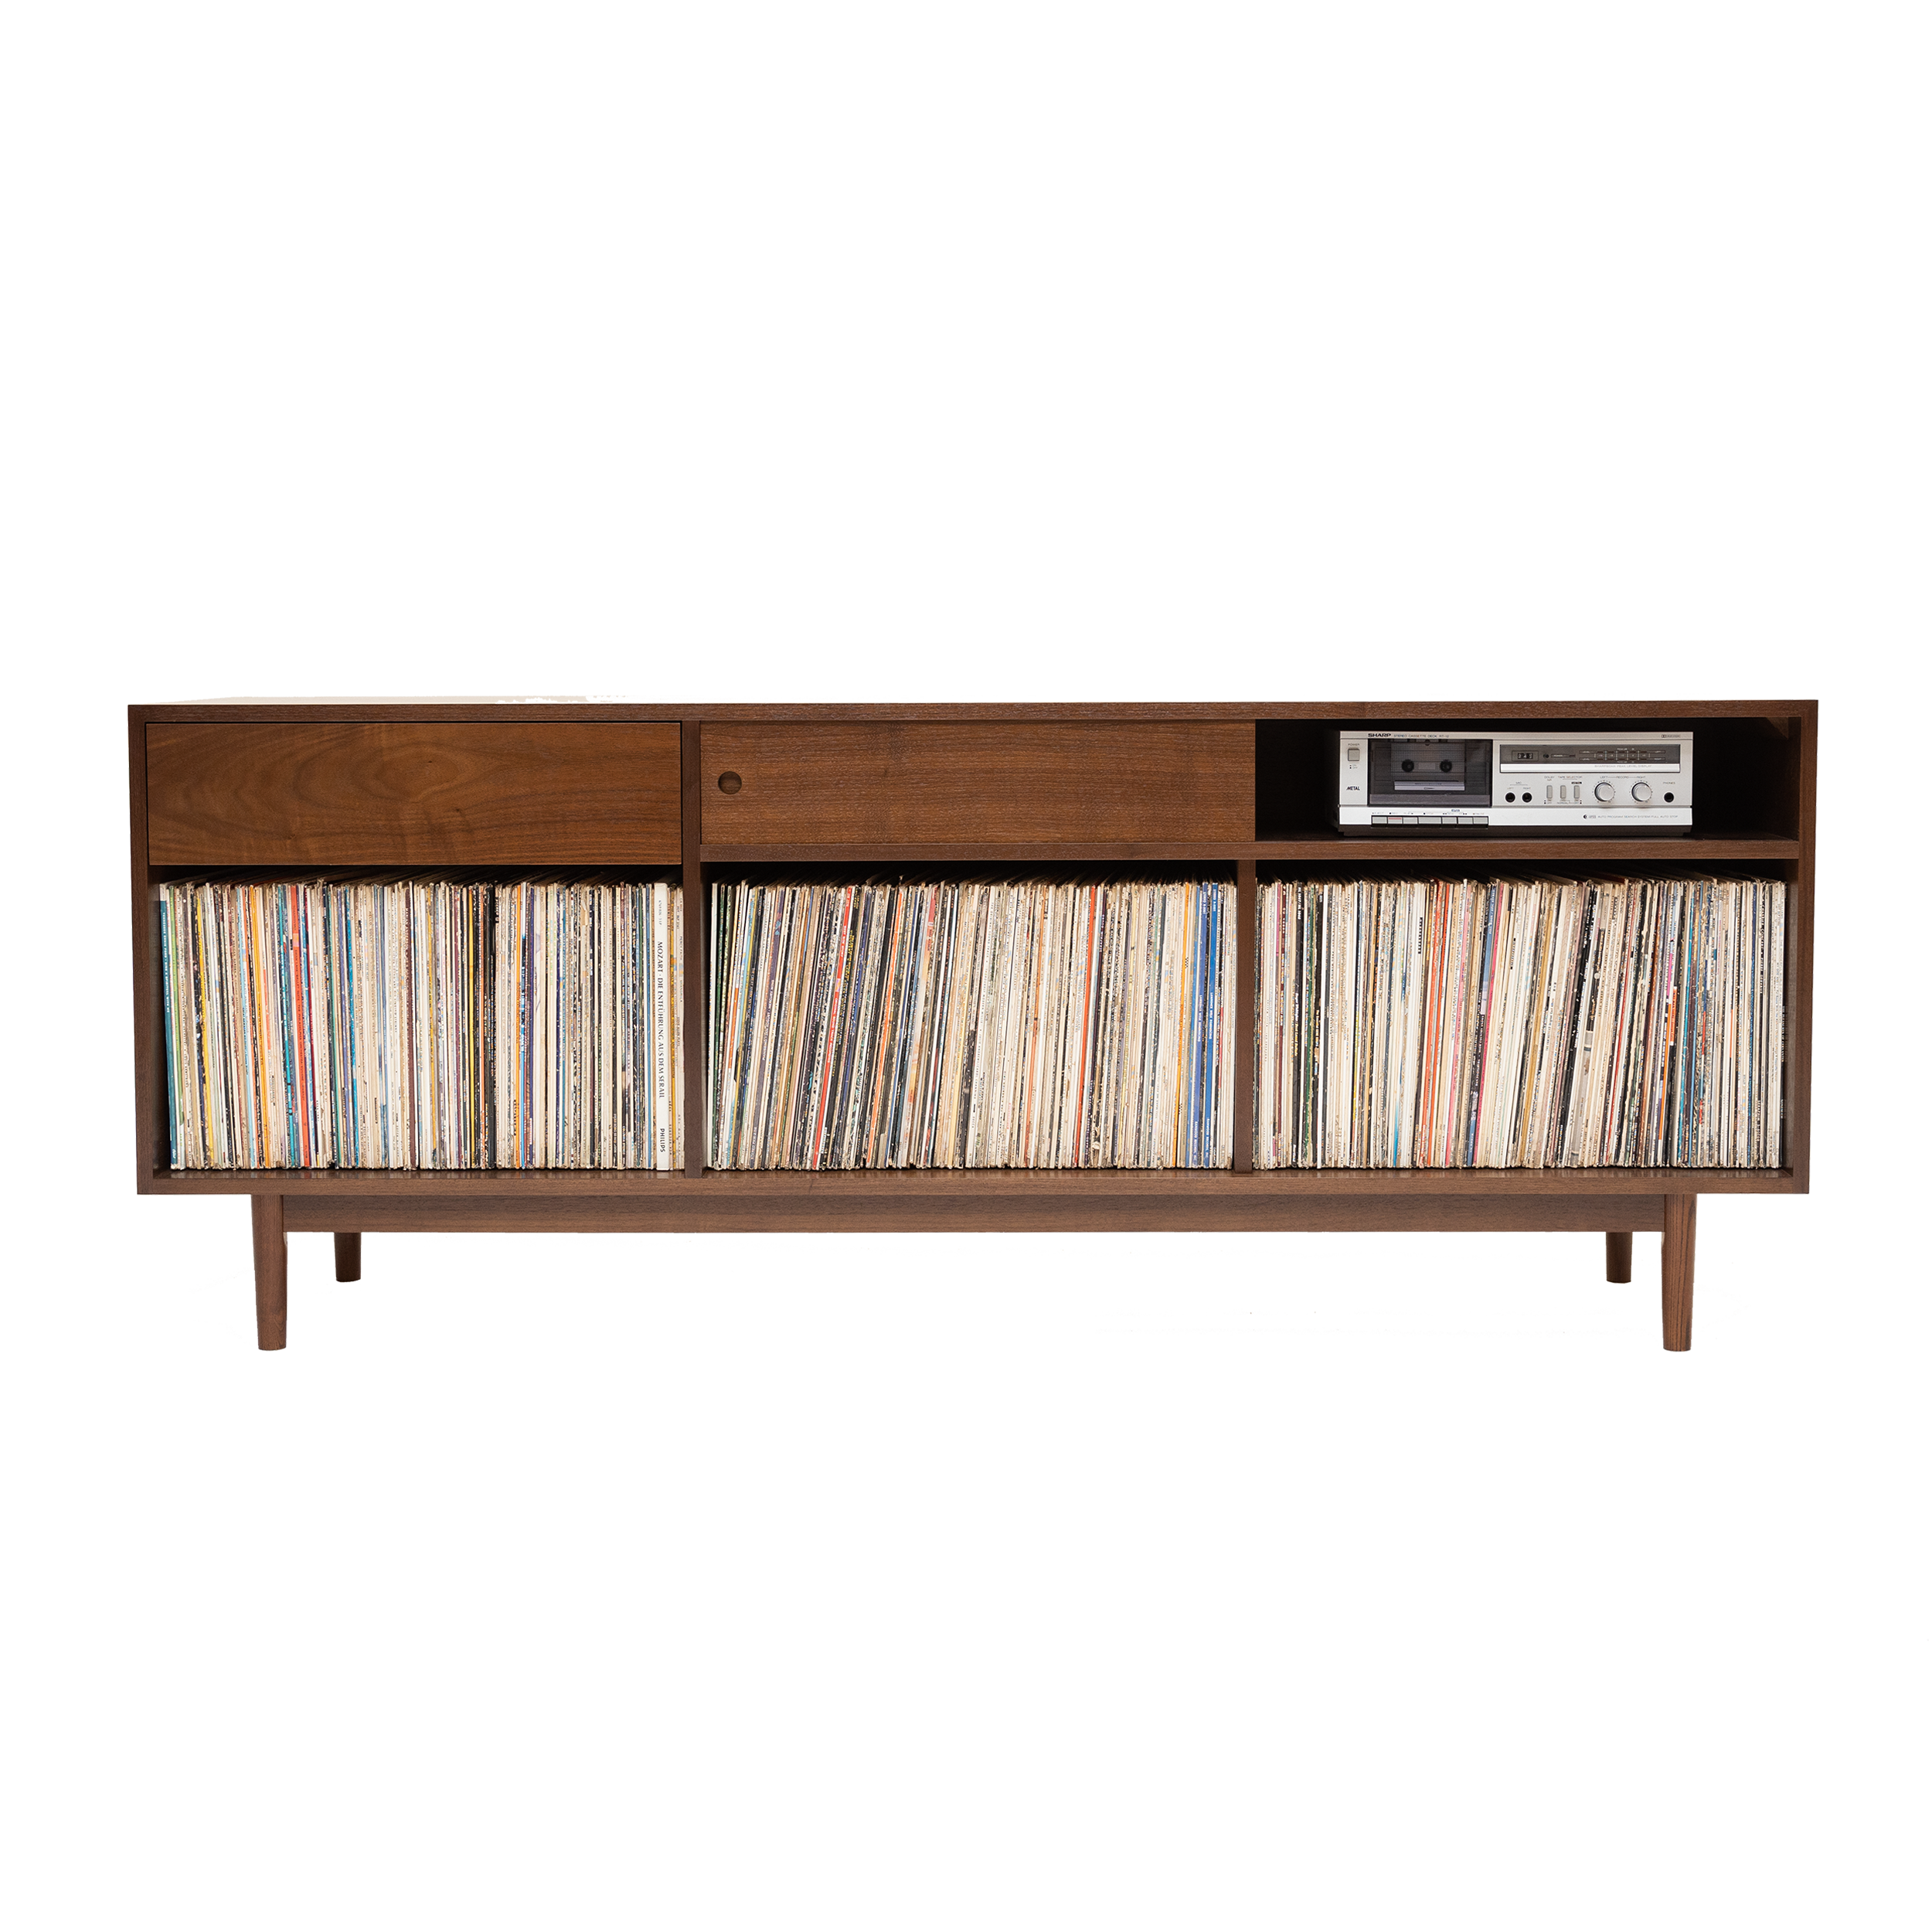 1 x 3 Combo Record Storage Cabinet